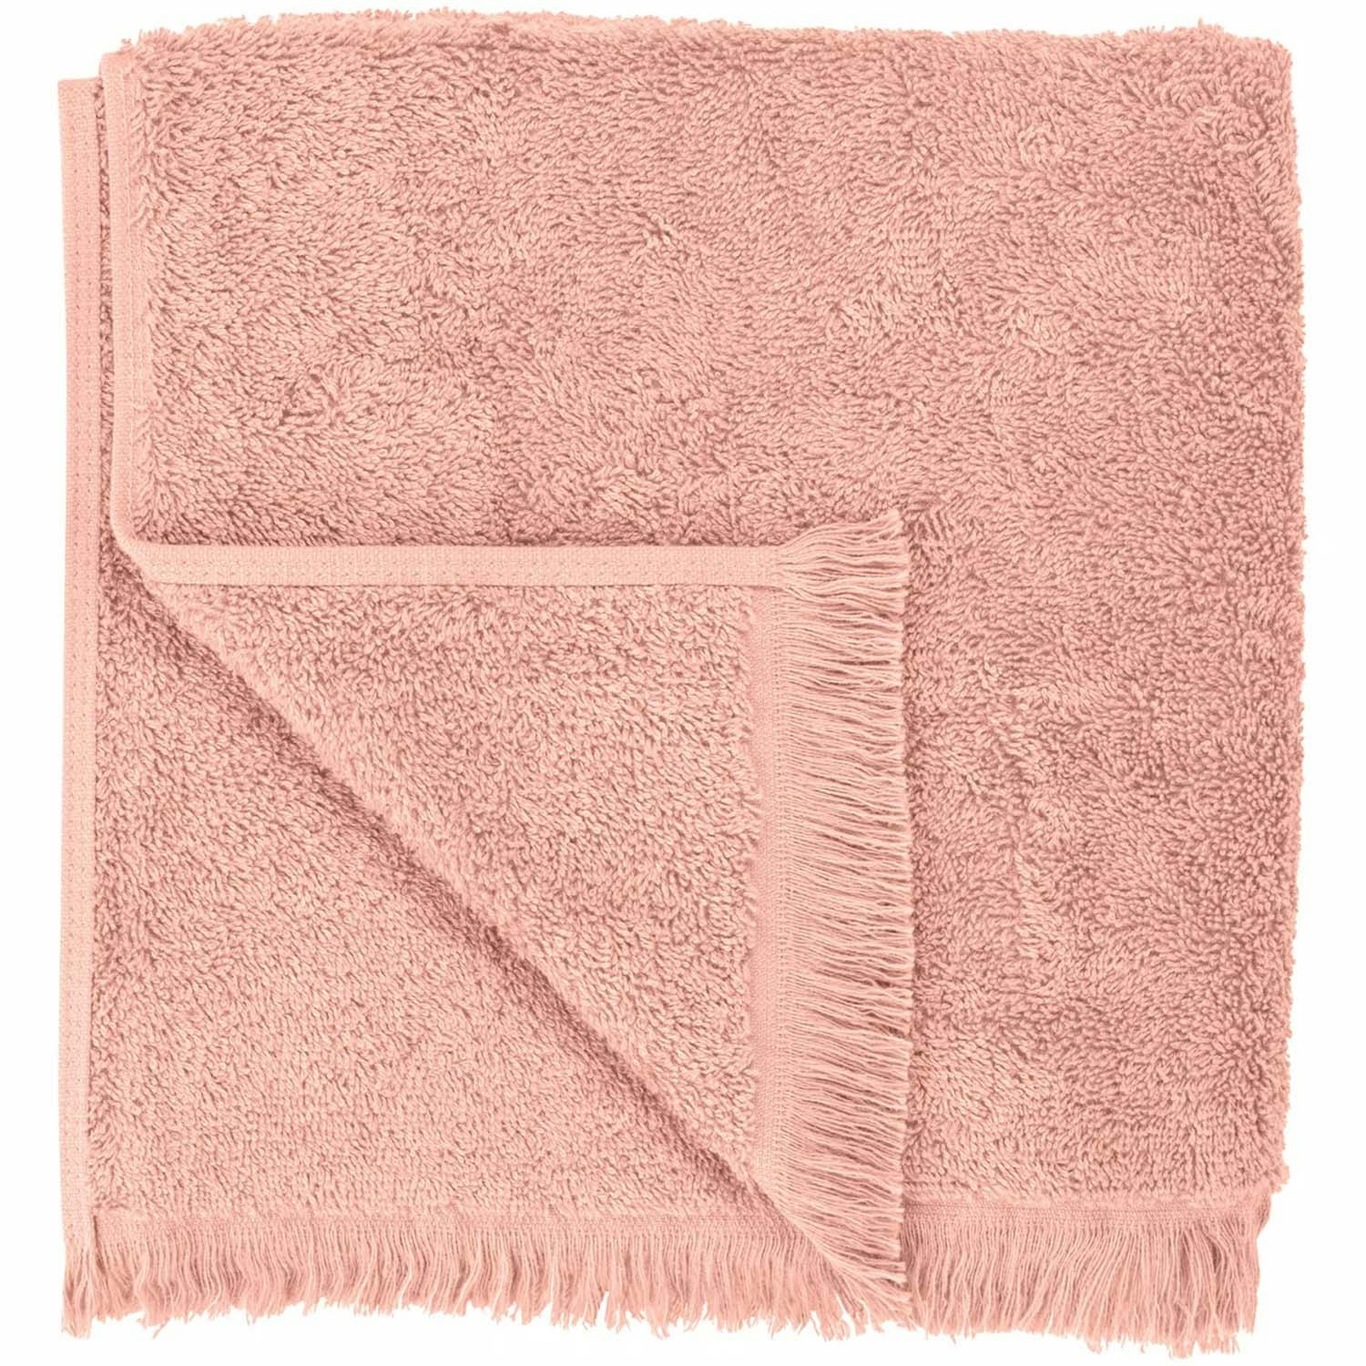 FRINO Towel 50x100 cm, Misty Rose